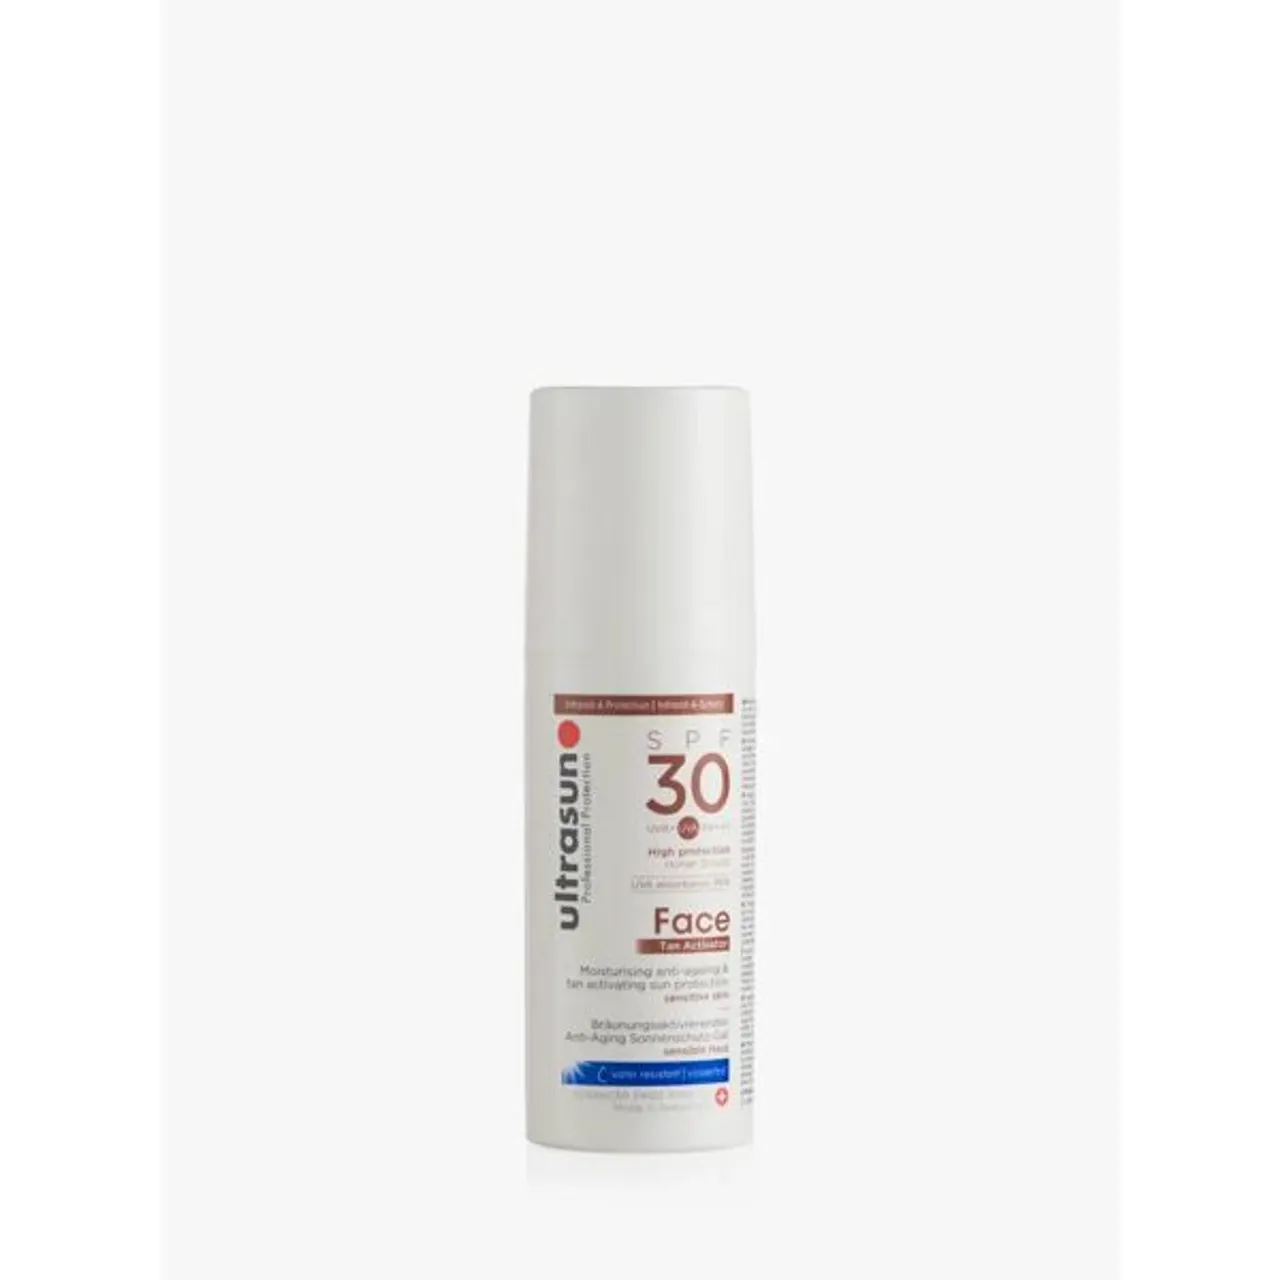 Ultrasun SPF 30 Face Tan Activator, 50ml - Unisex - Size: 50ml